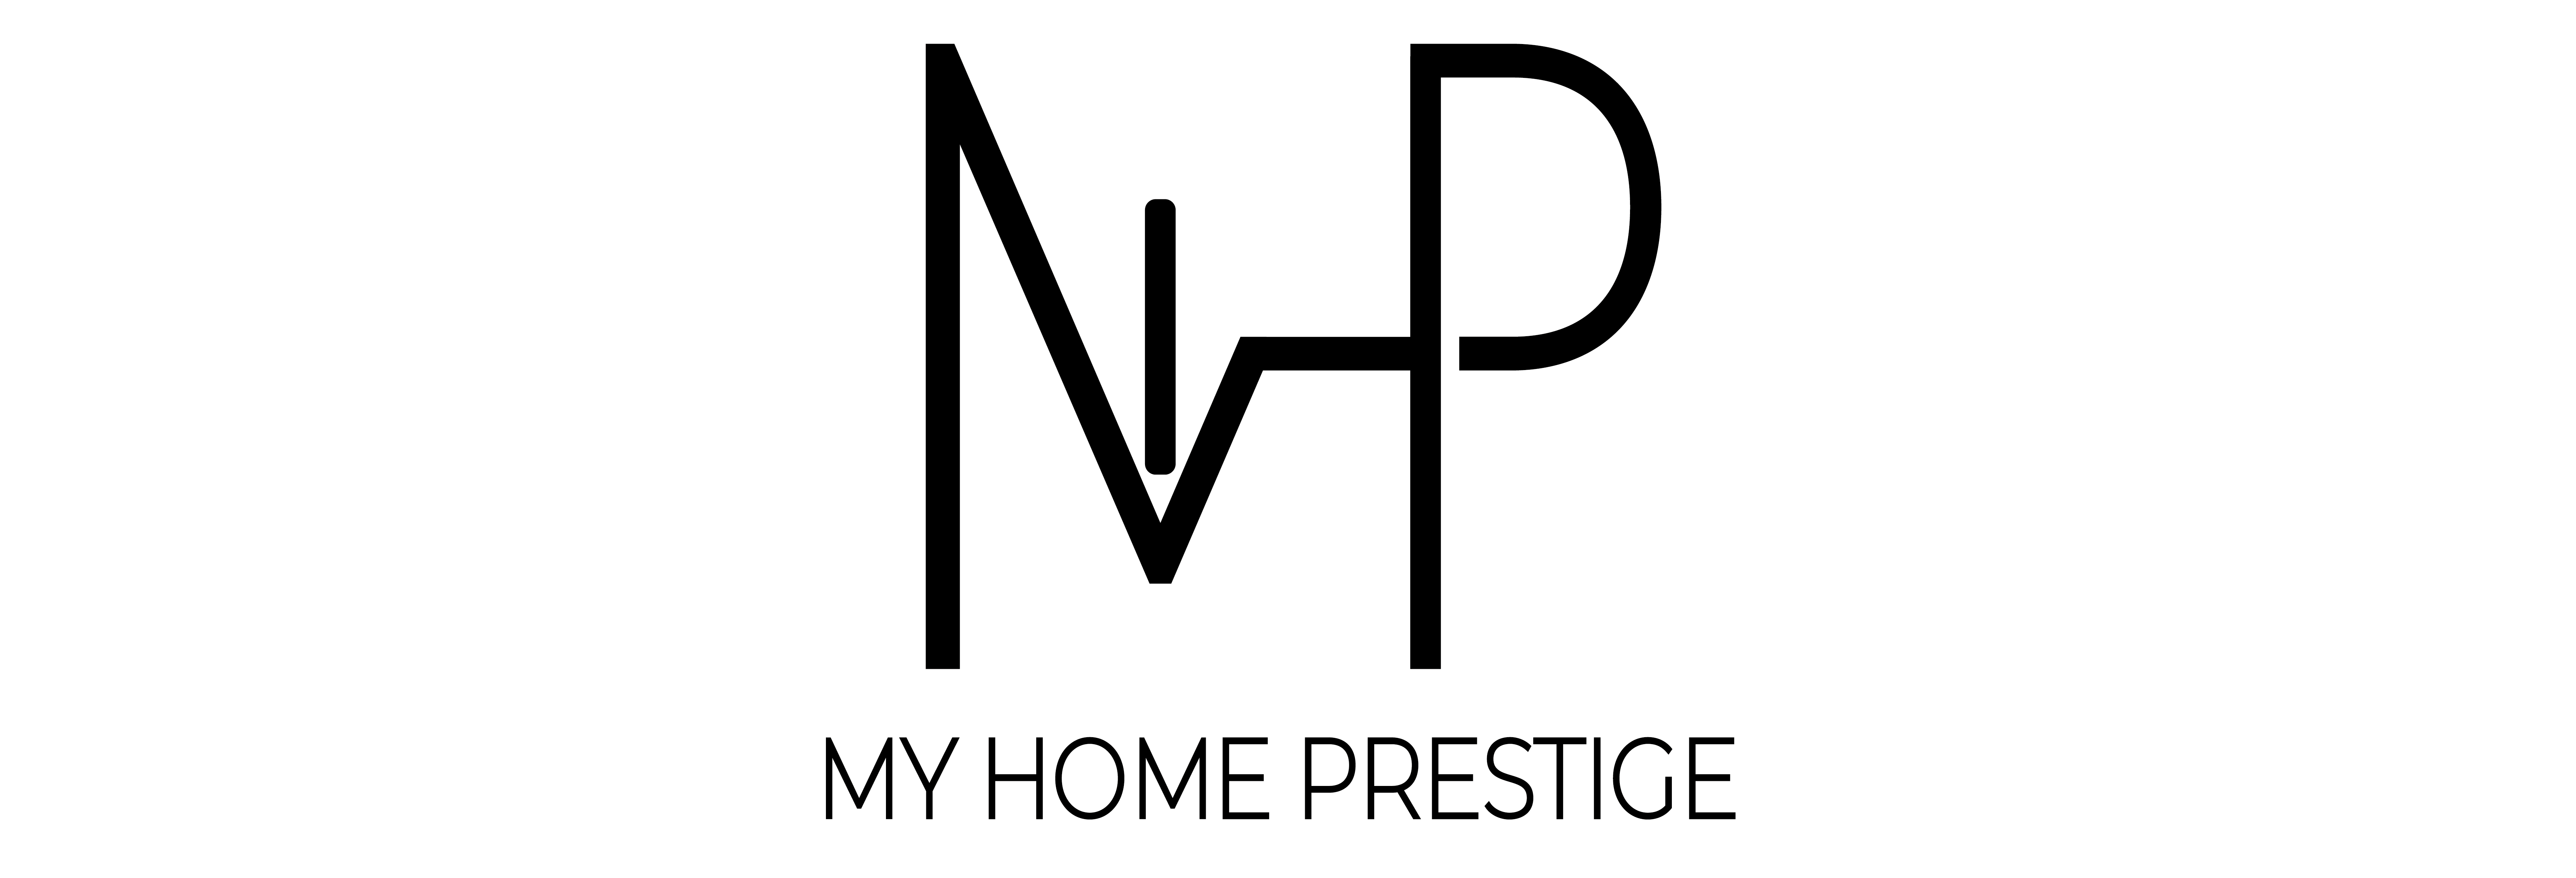 My Home Prestige